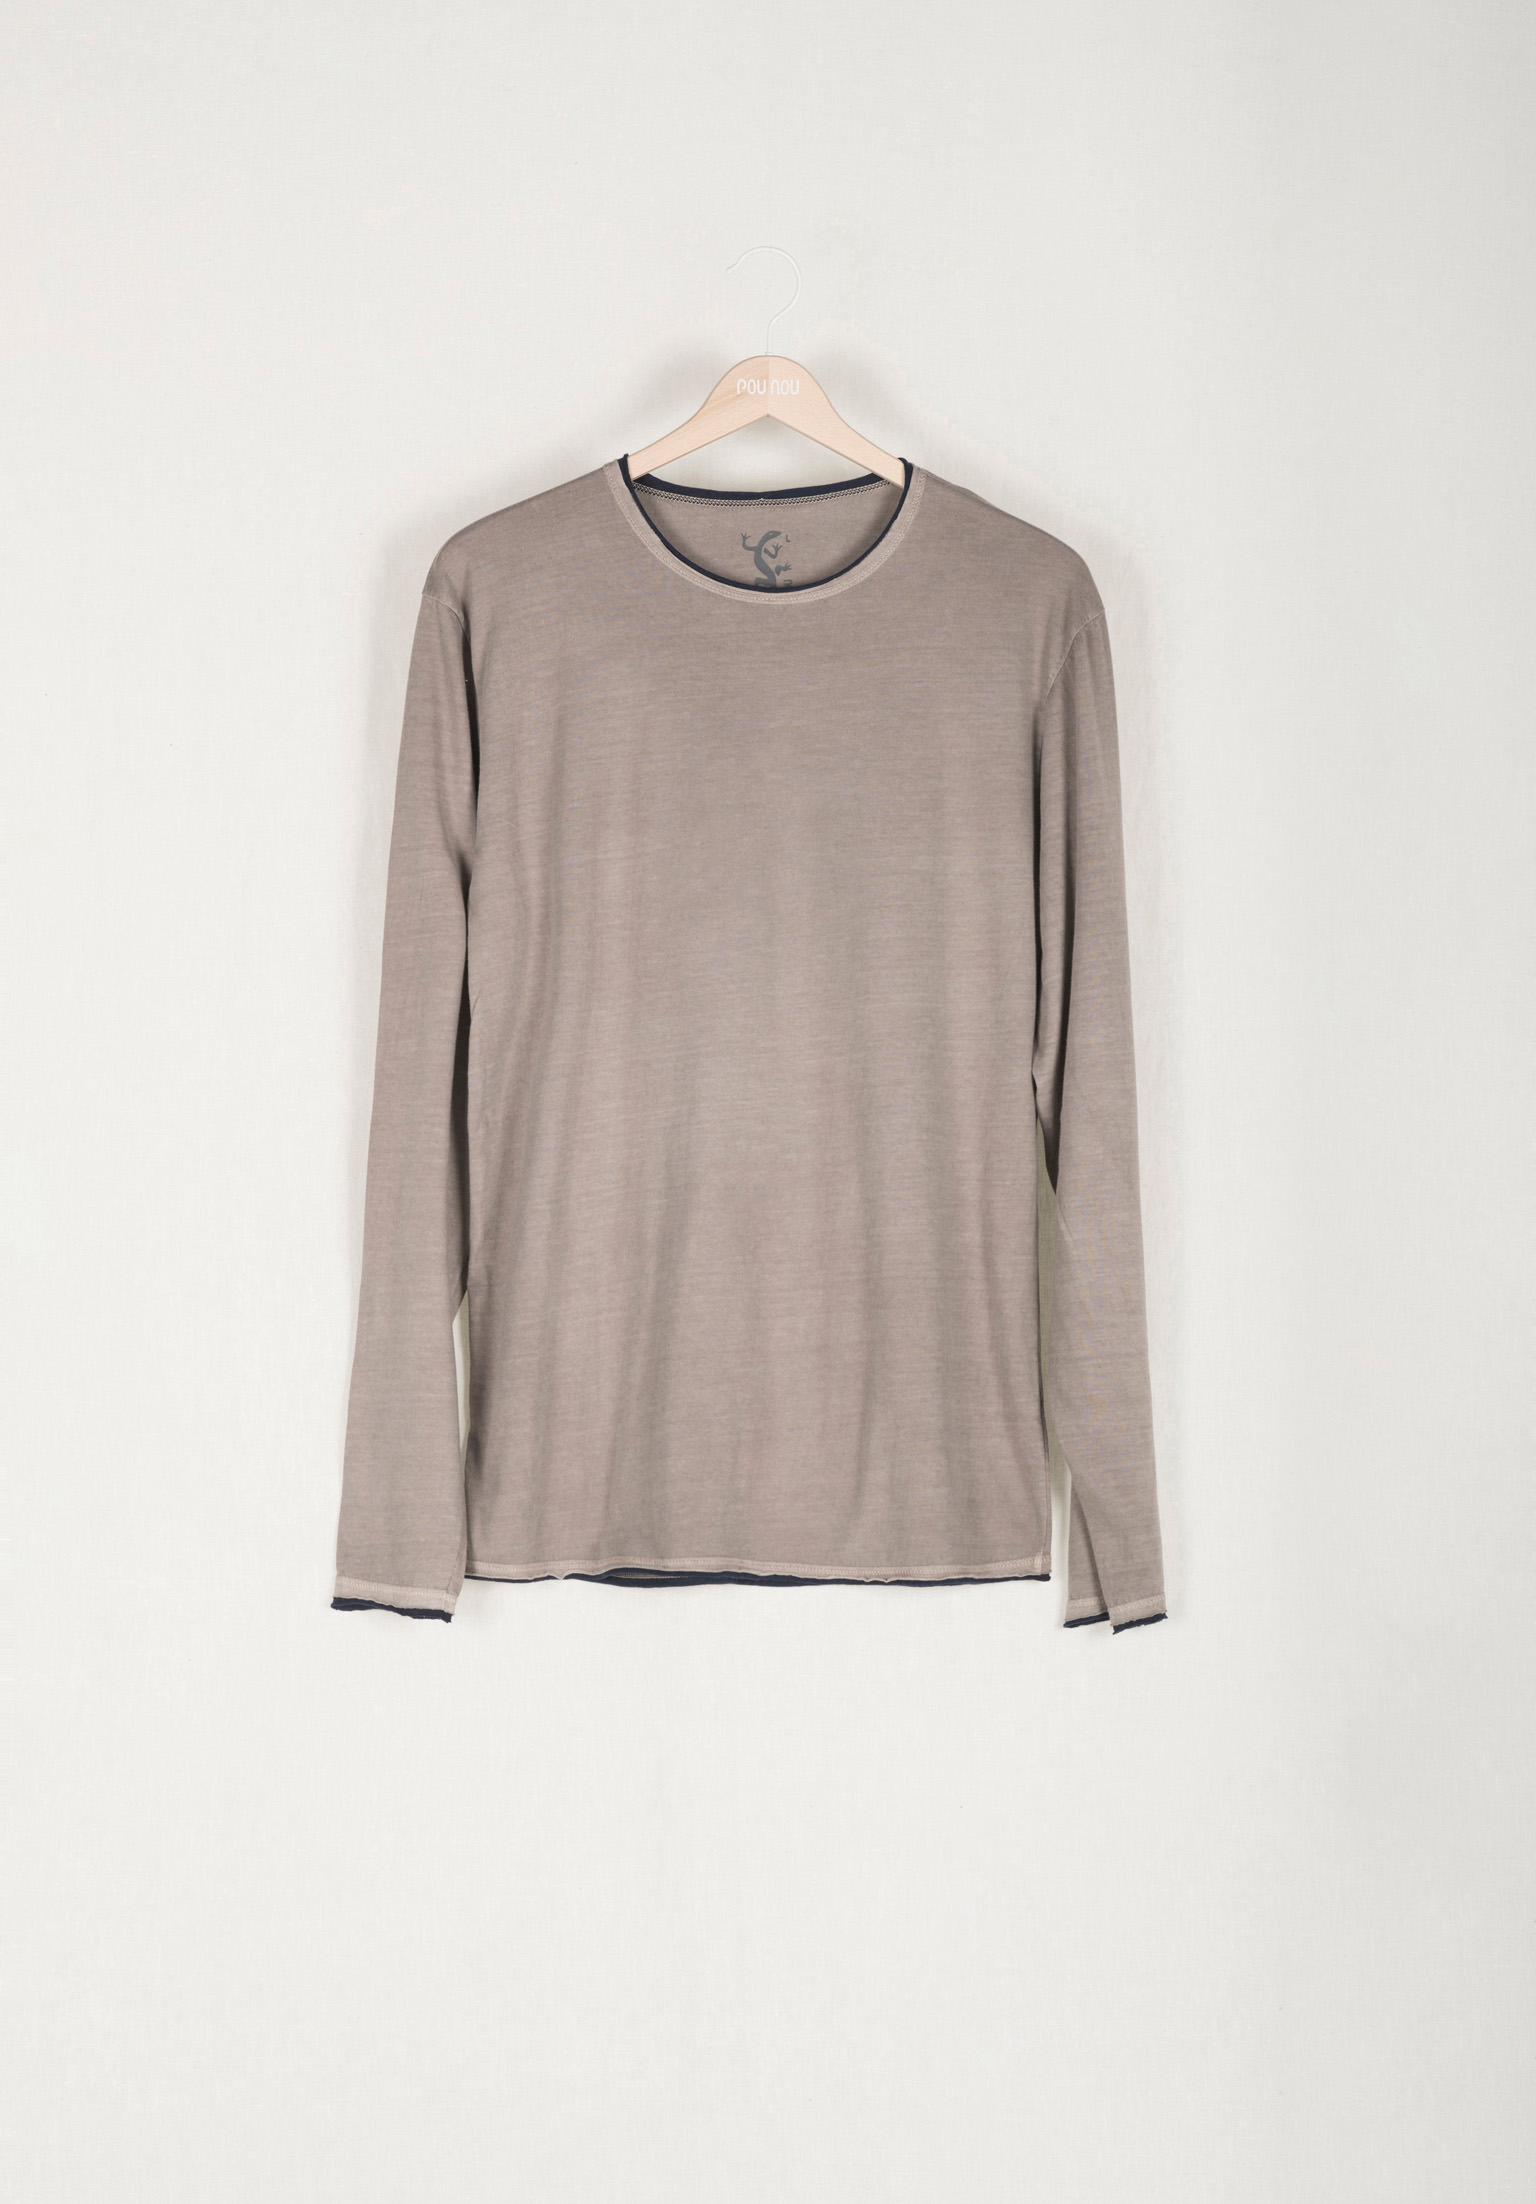 Plain long-sleeved cotton t-shirt rollie 